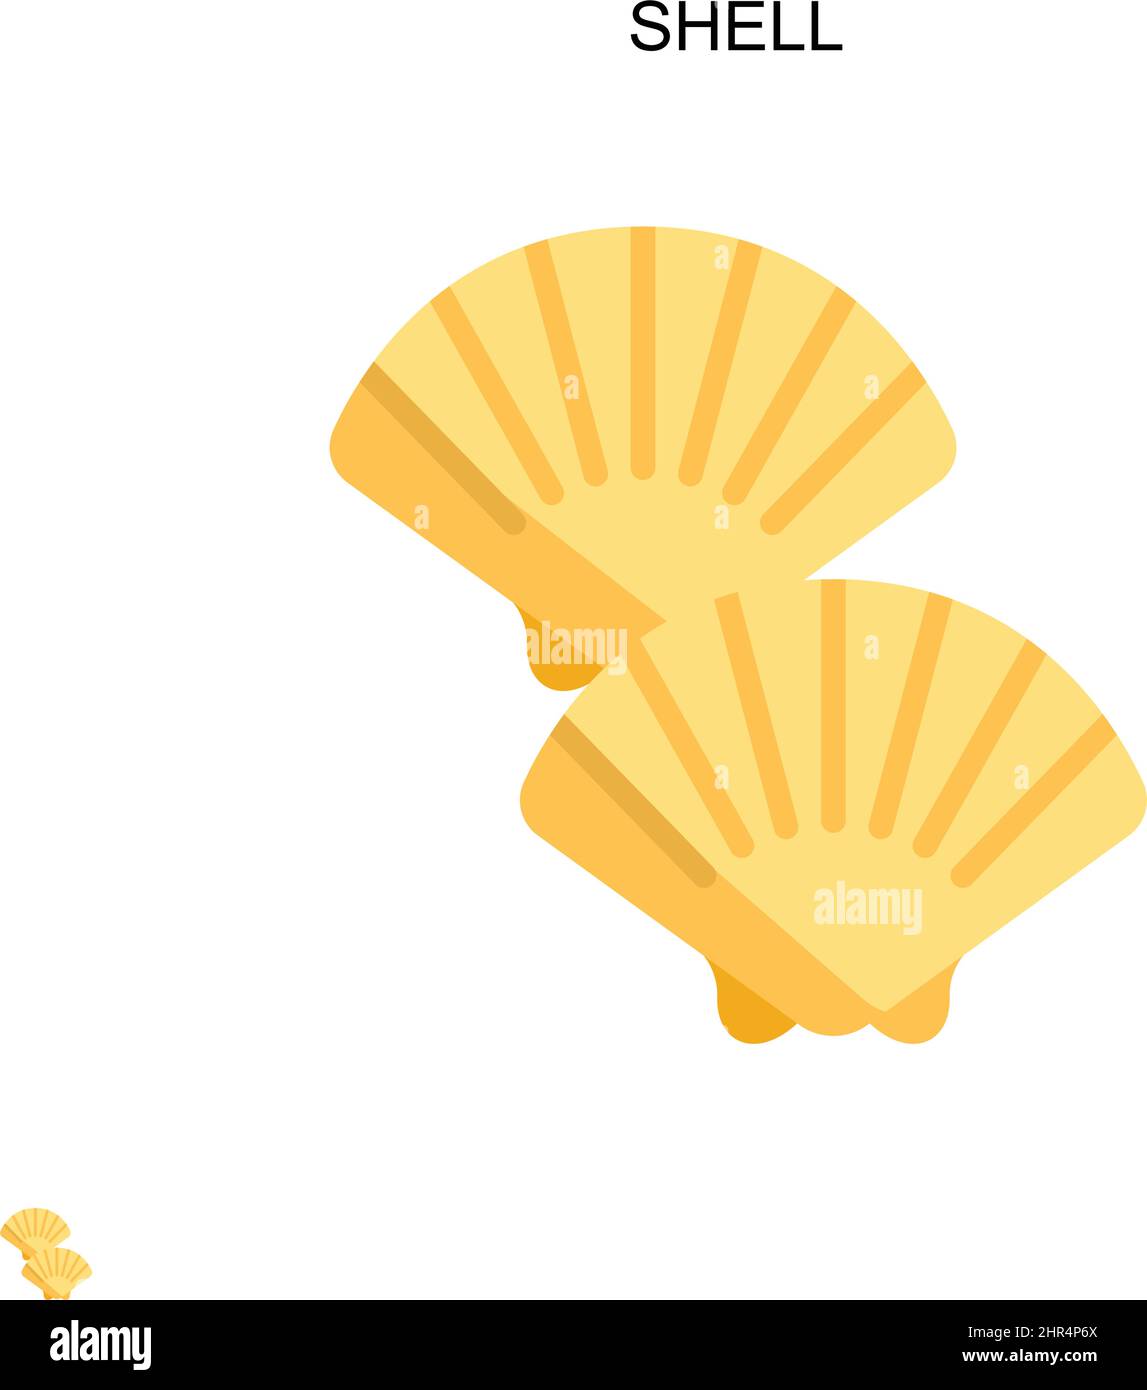 Einfaches Vektorsymbol der Shell. Illustration Symbol Design-Vorlage für Web mobile UI-Element. Stock Vektor